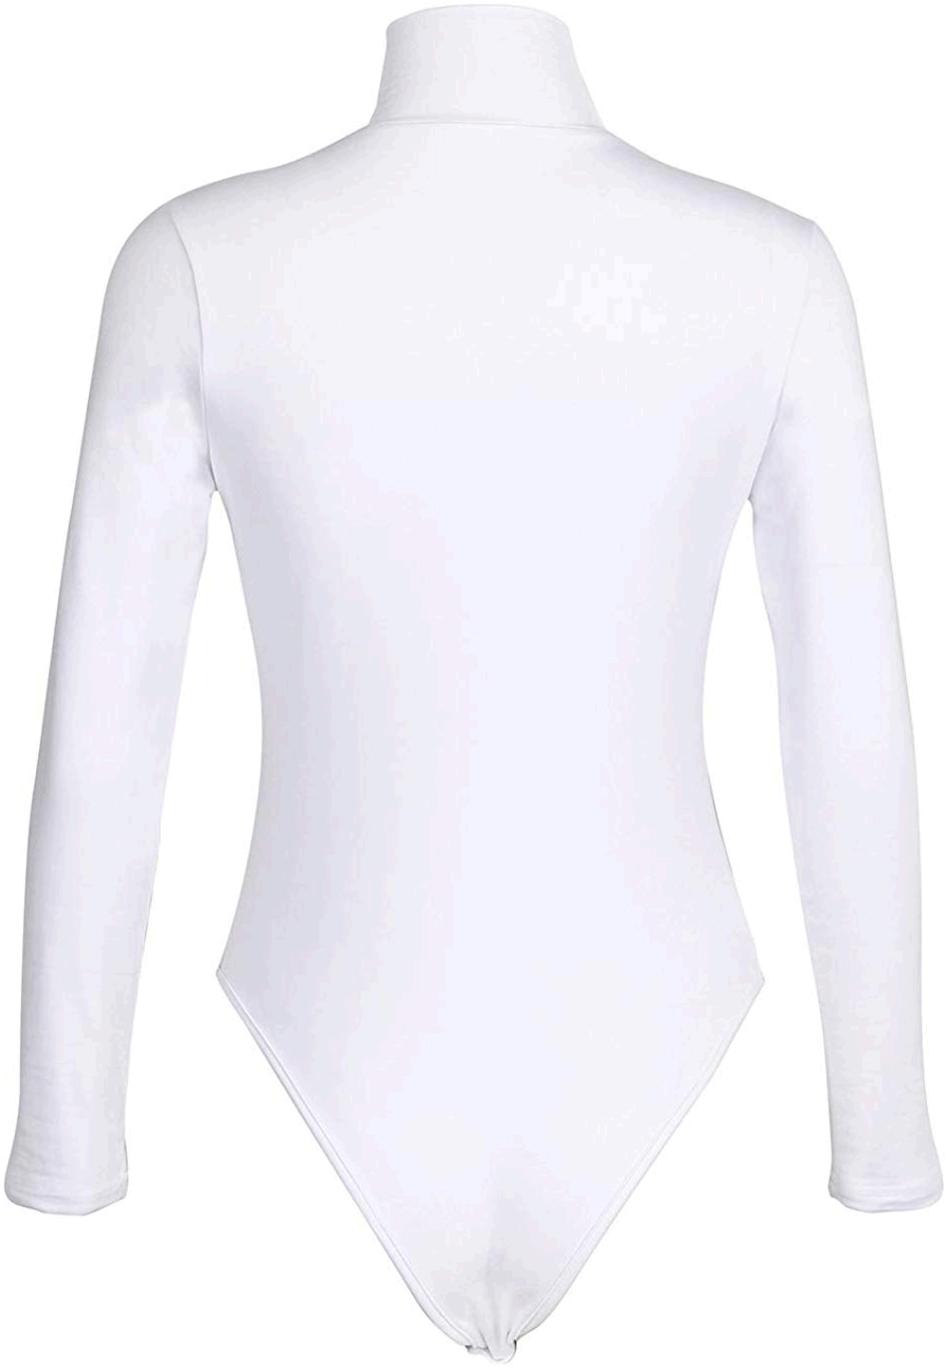 Primoda Women Stretchy Turtleneck Long Sleeve Bodysuits Basic White